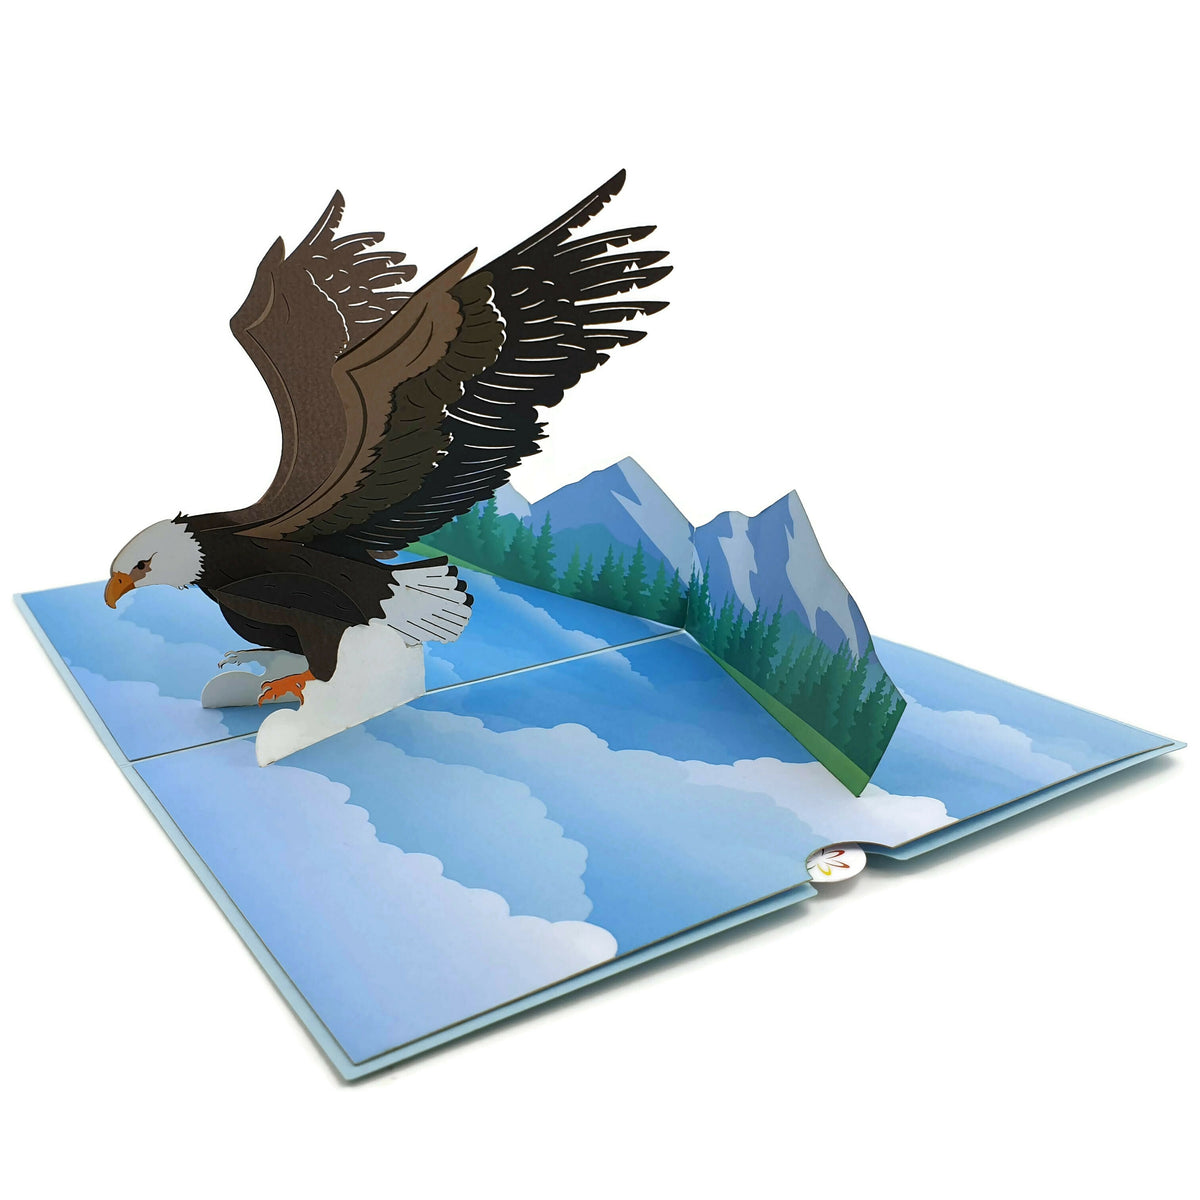 Eagle 3D pop up card